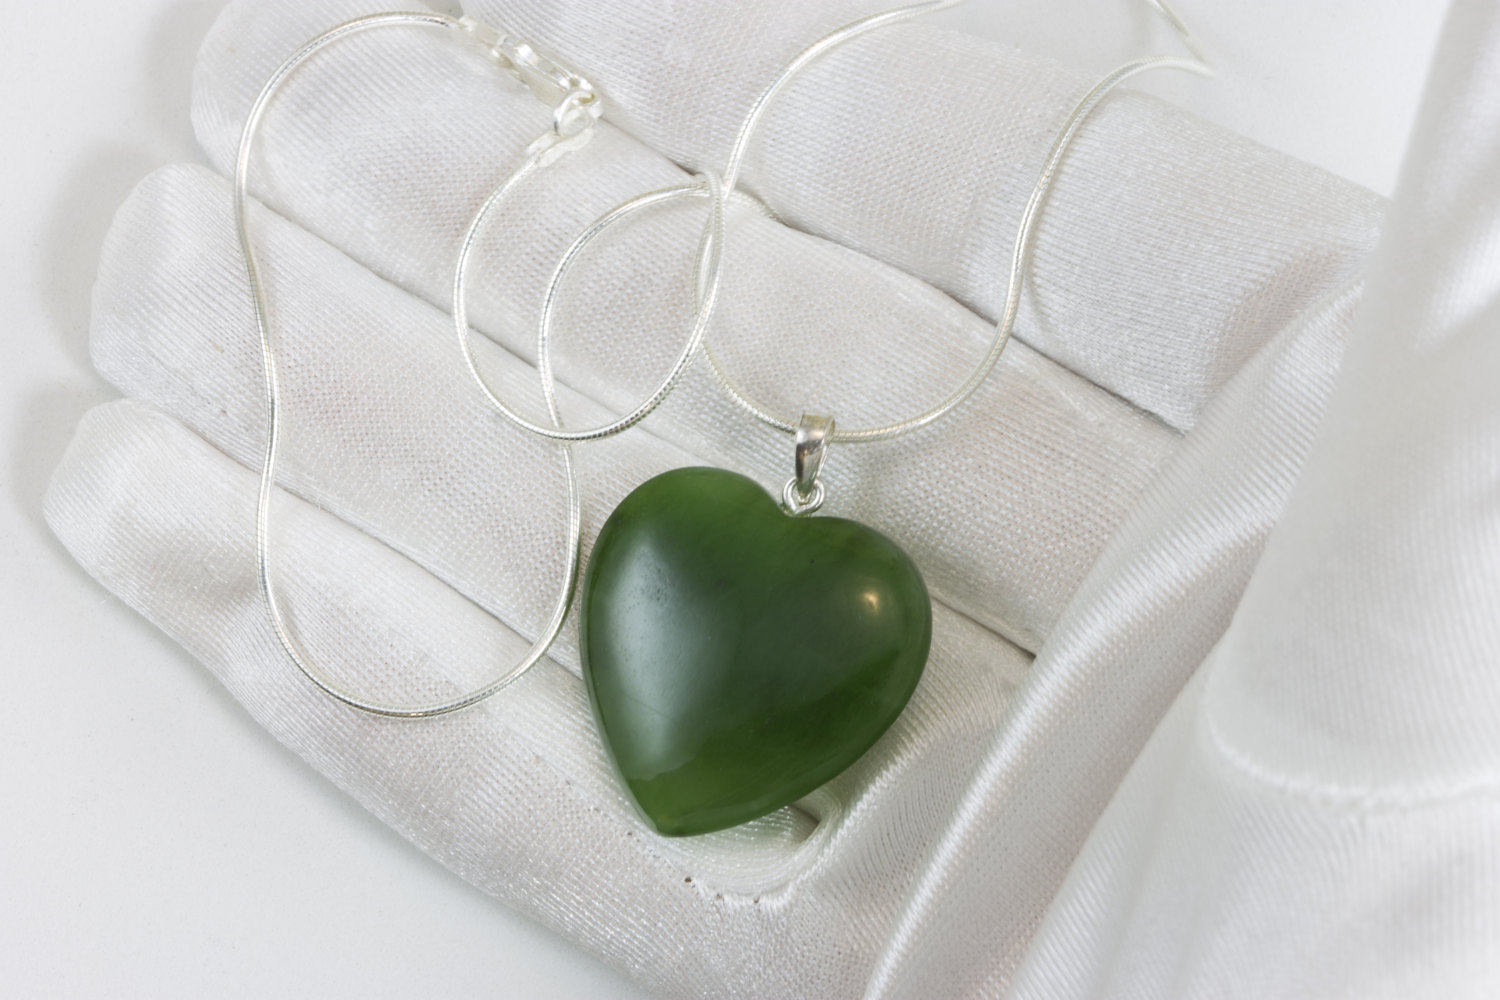 Translucent Icy Green Jade Pendant Handcarved 925 Silver Leaf | eBay